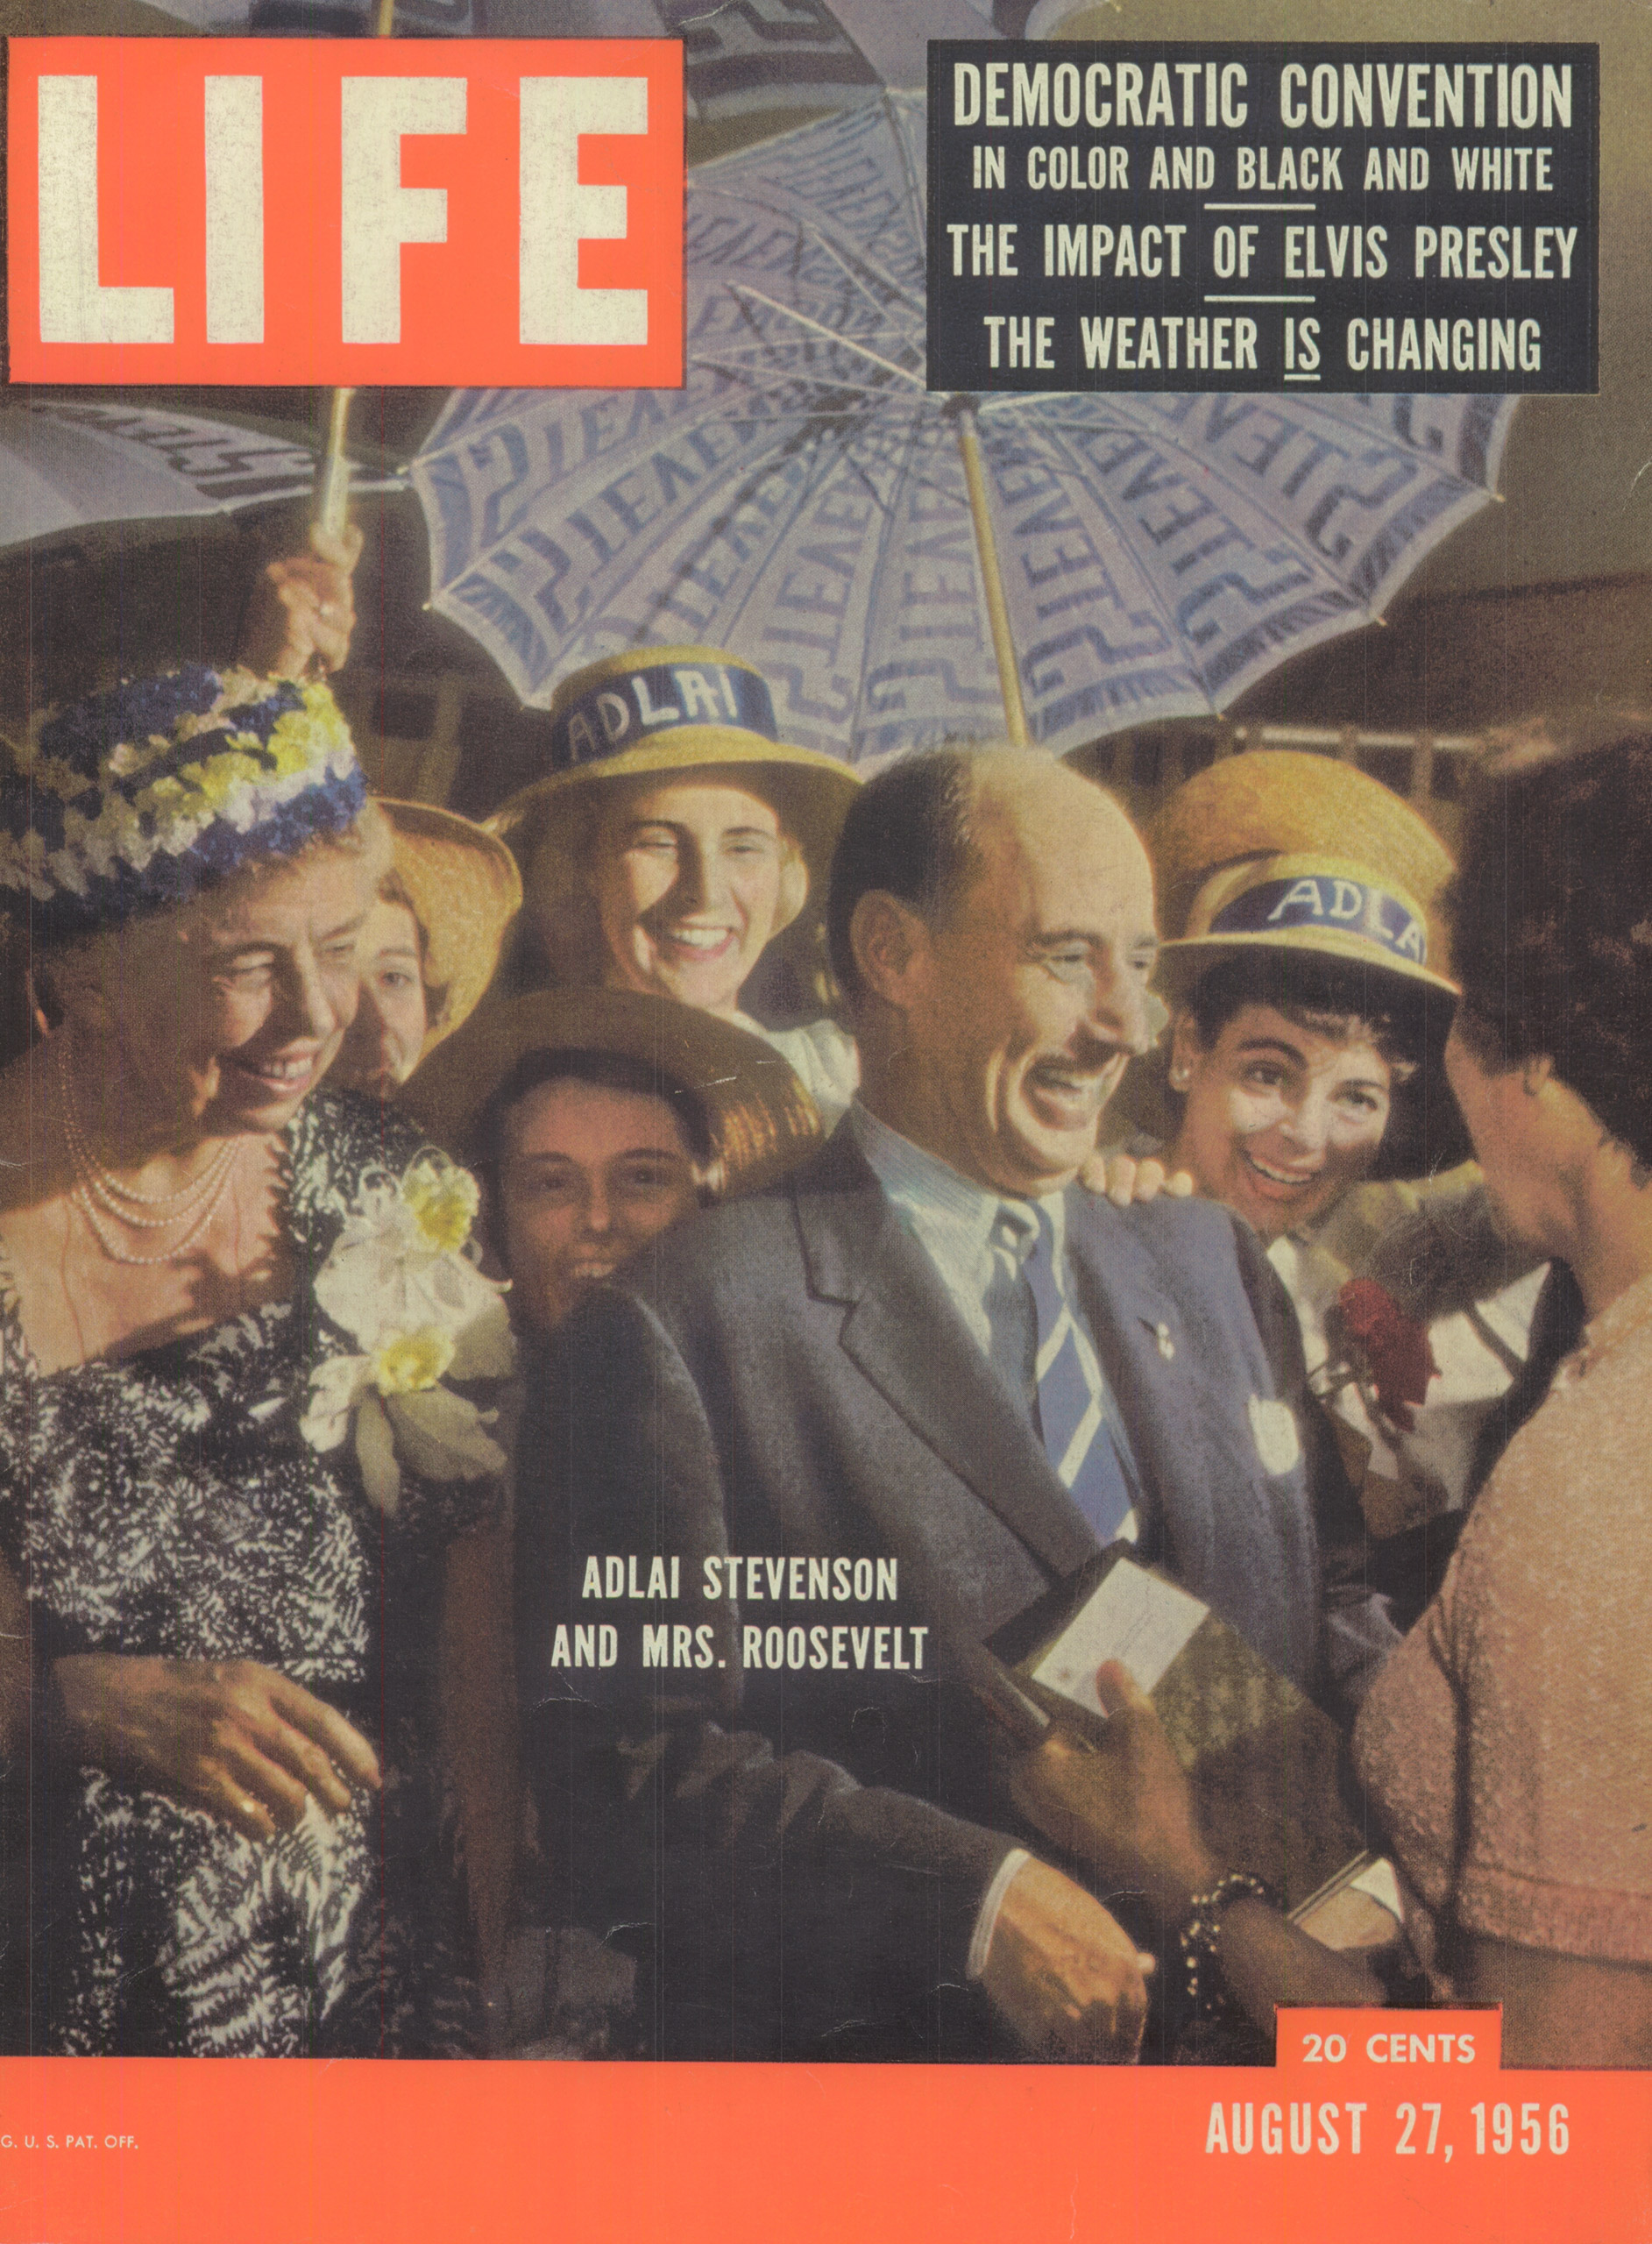 Aug. 27, 1956 cover of LIFE magazine.